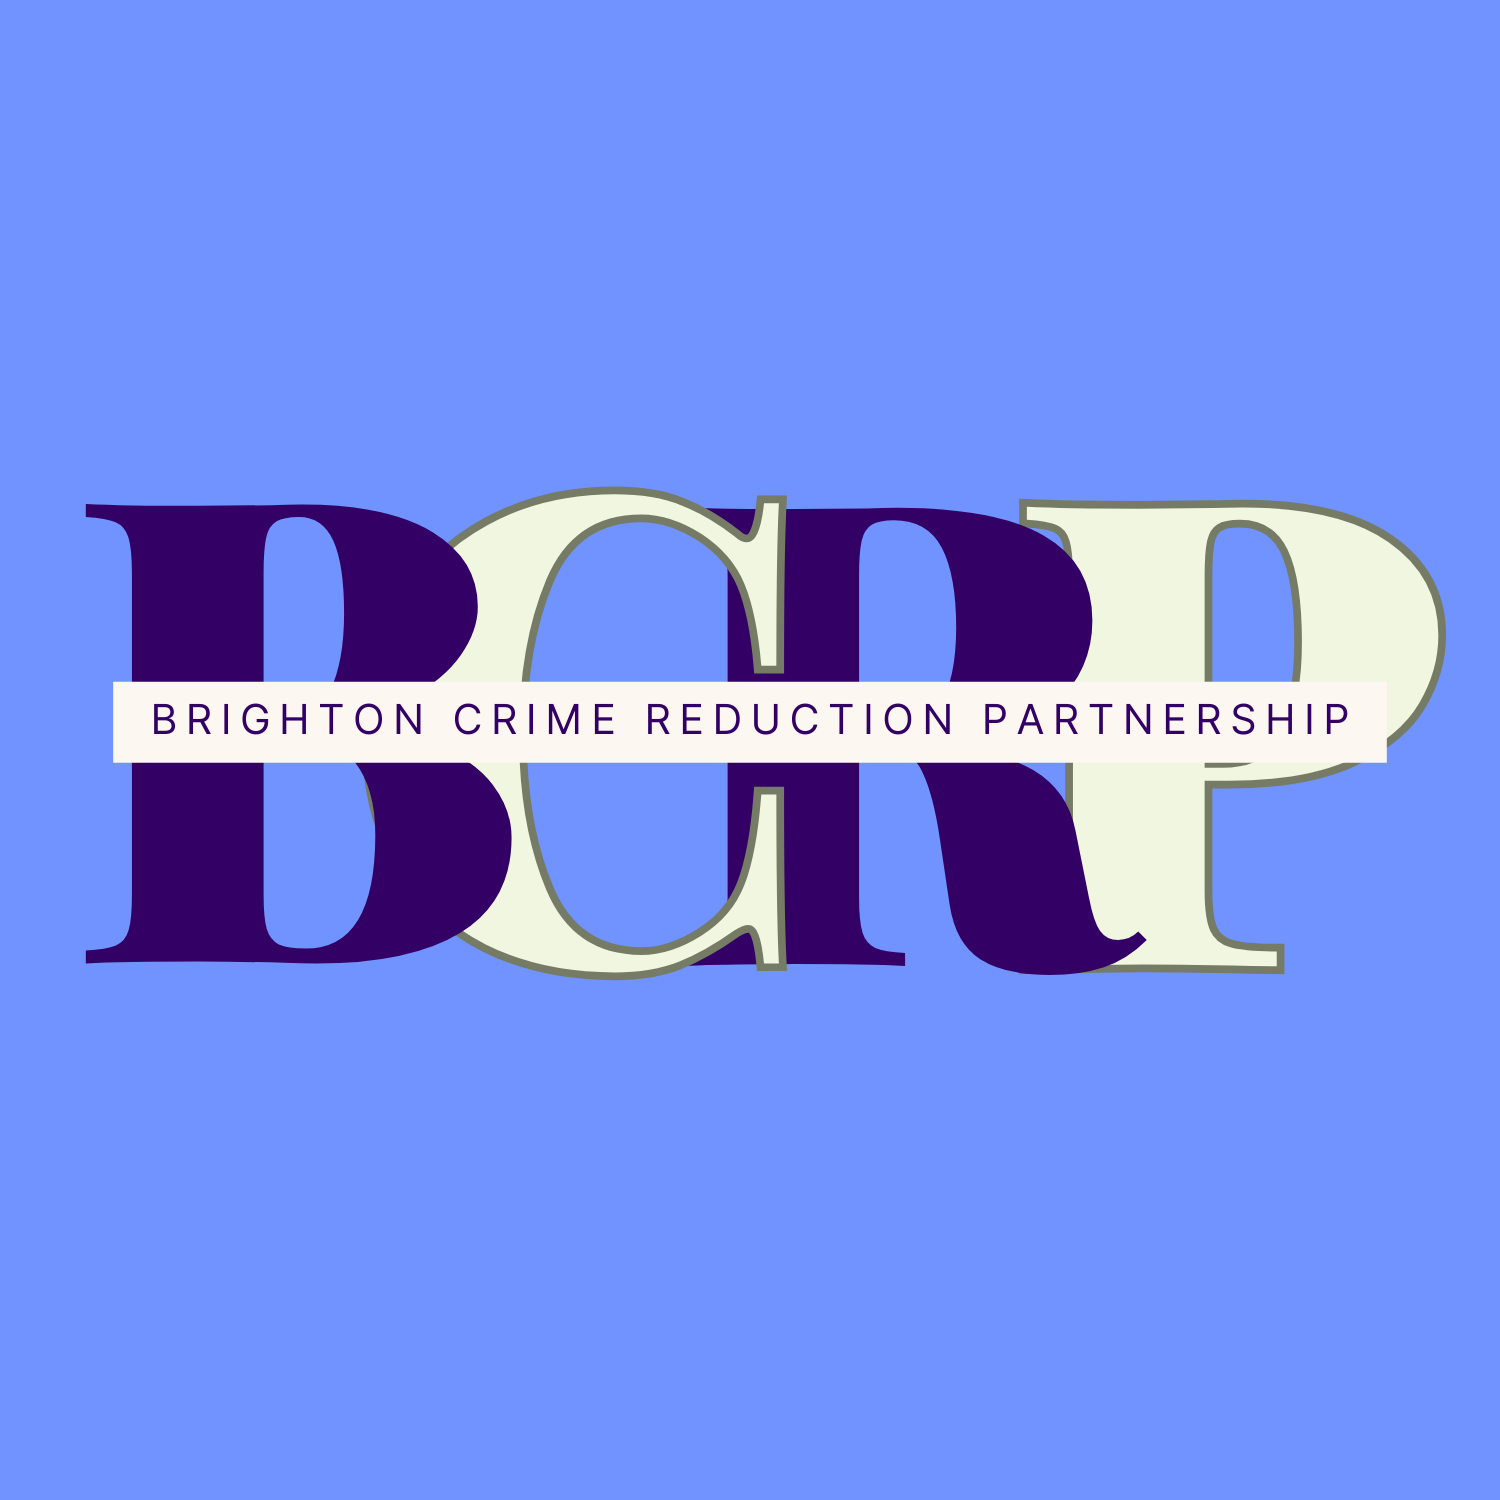 Brighton Crime Reduction Partnership